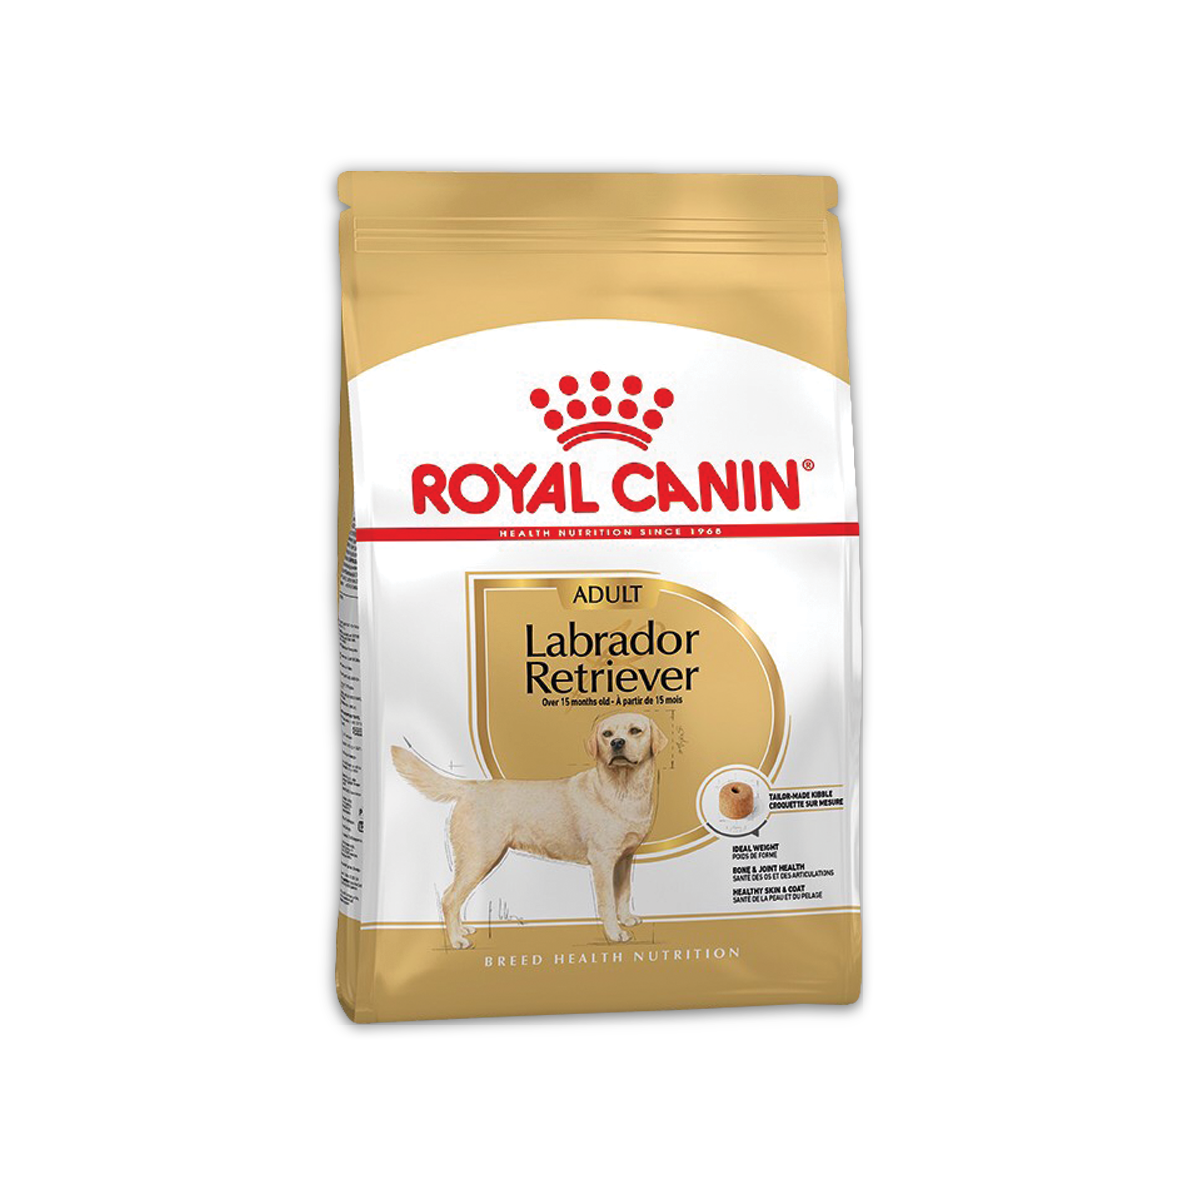 Royal Canin Labrador Retriever Adult โรยัล คานิน อาหารสำหรับสุนัขโตพันธุ์ ลาบราดอร์ รีทรีฟเวอร์ อายุ 15 เดือนขึ้นไป